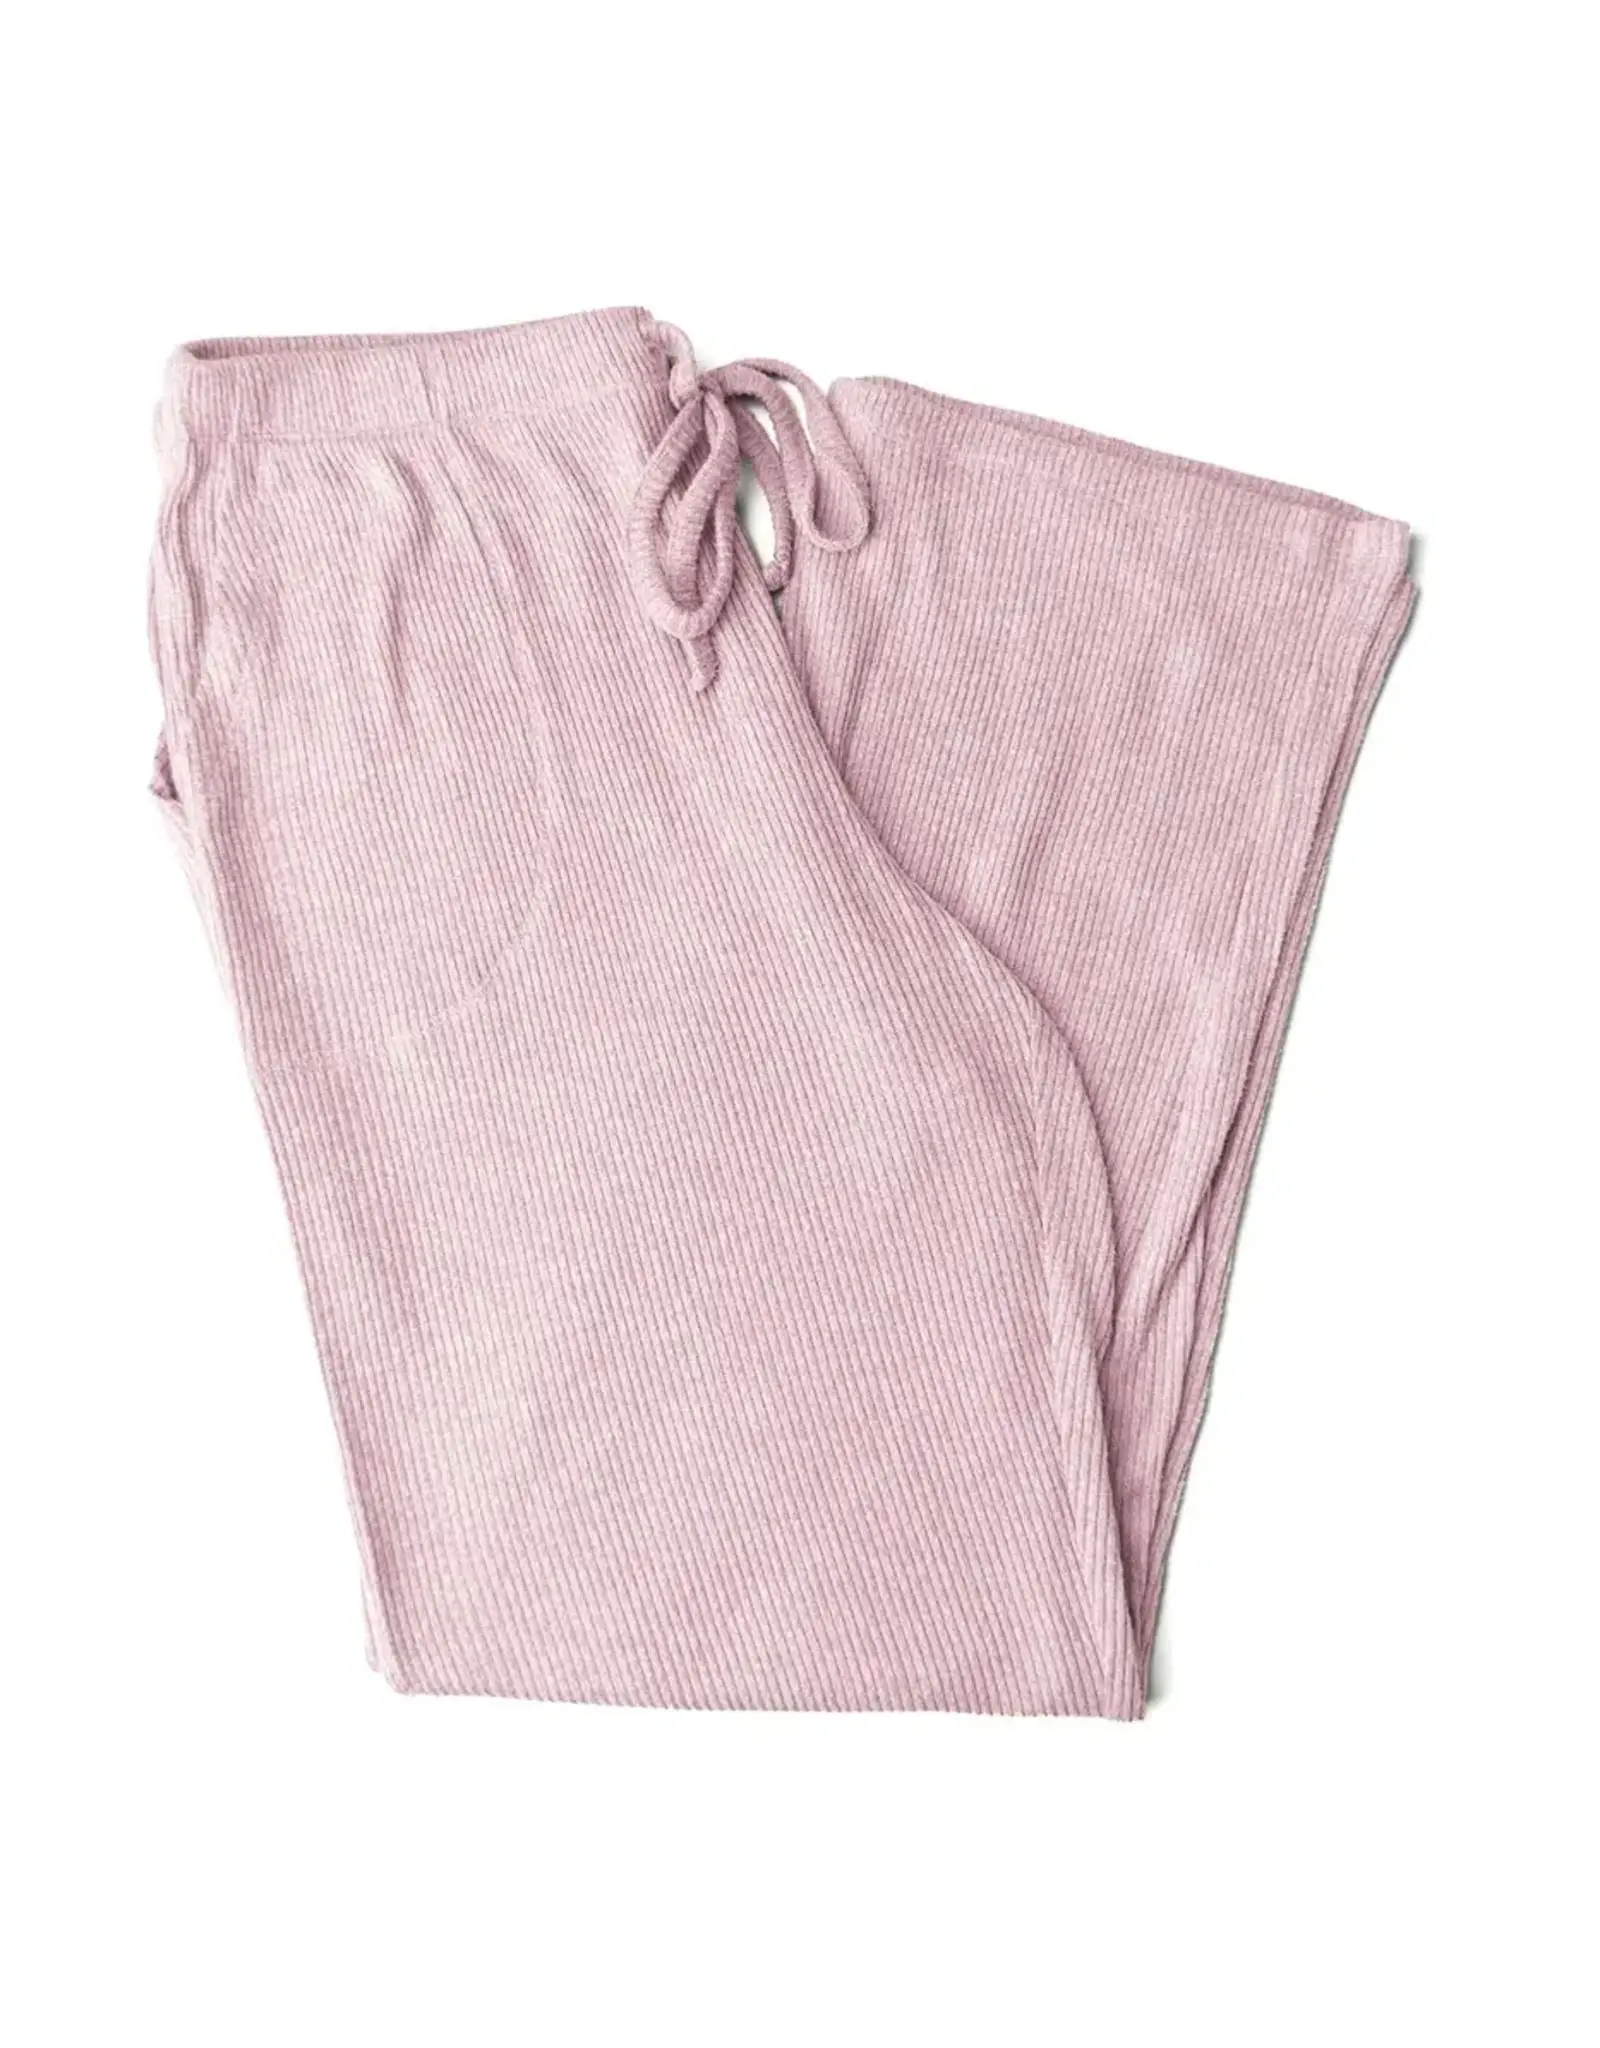 Hello Mello Cuddleblend Pants - Pink